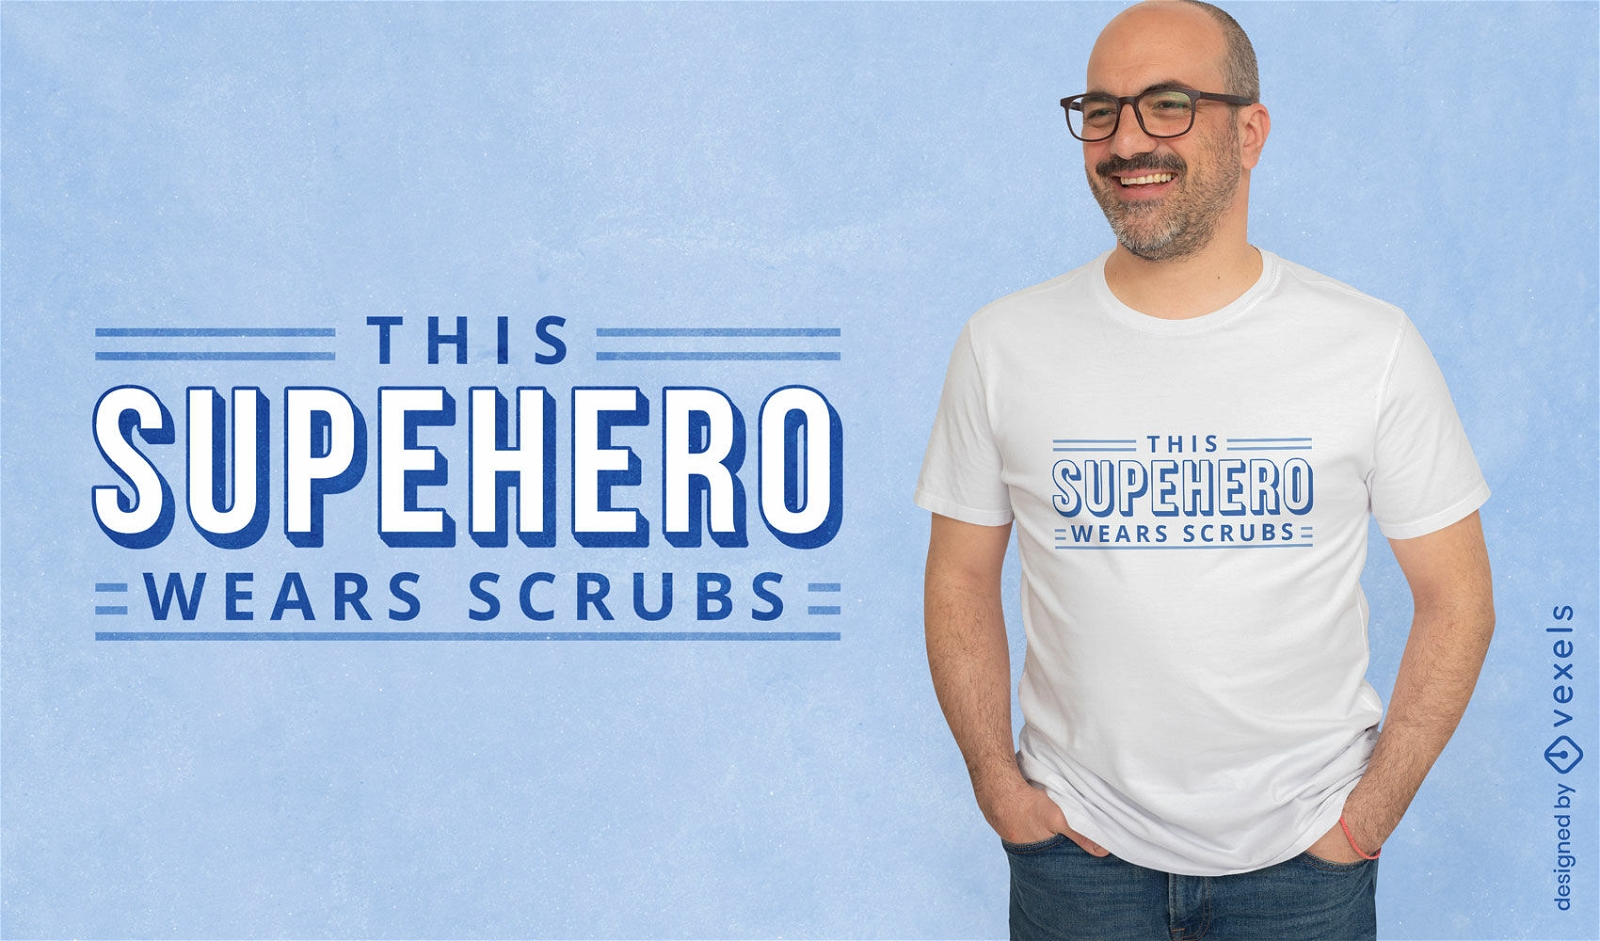 Superhero scrubs t-shirt design